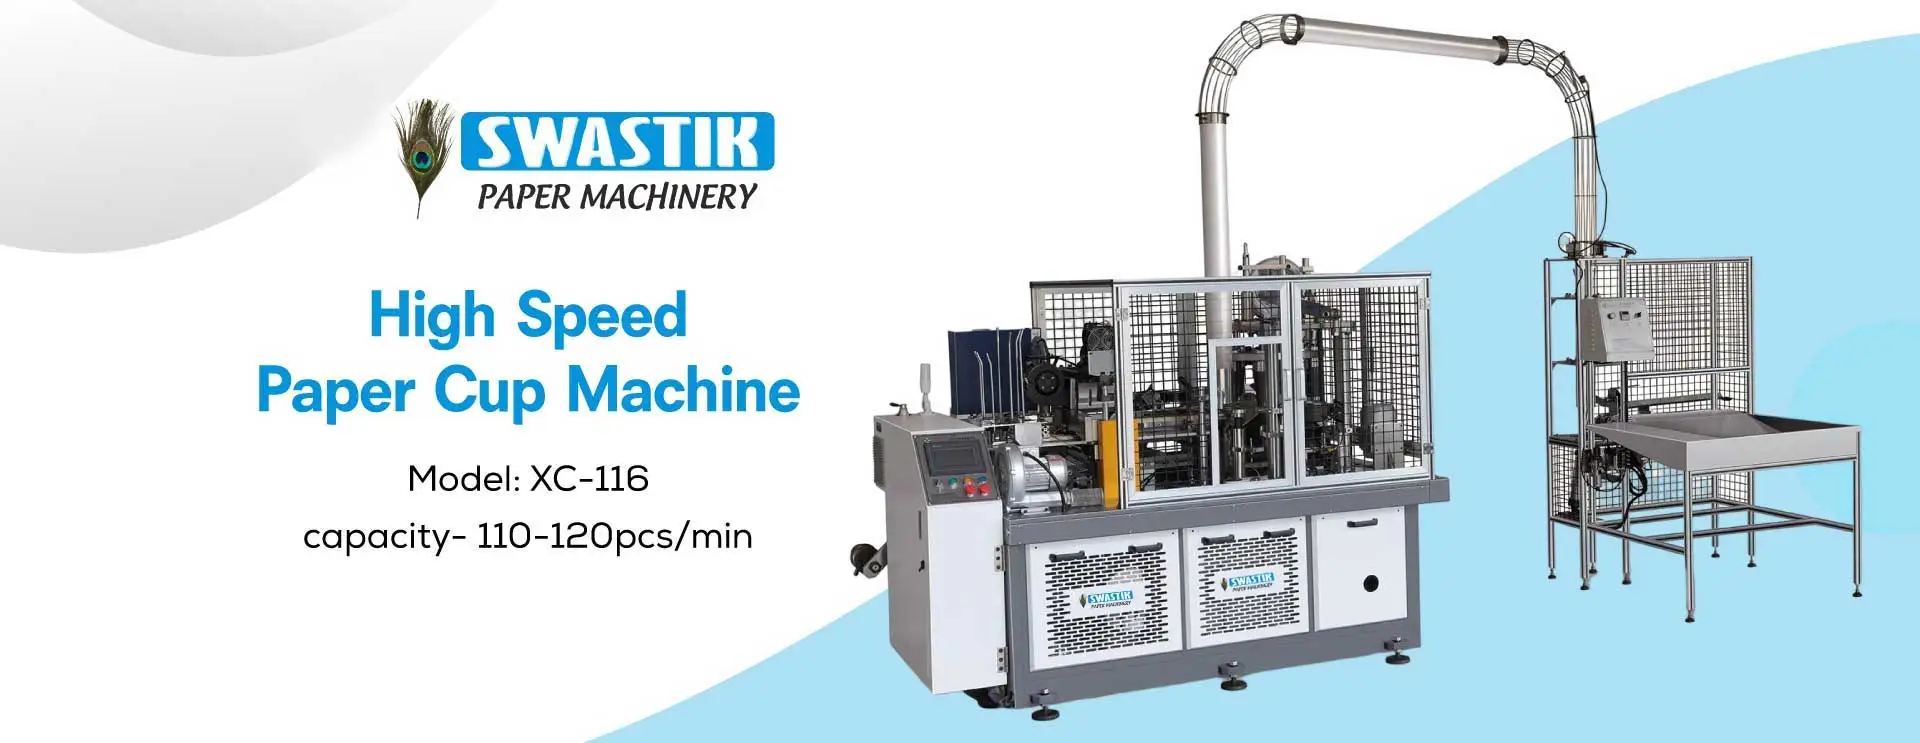 High Speed Paper Cup Machine Manufacturers in Aurangabad